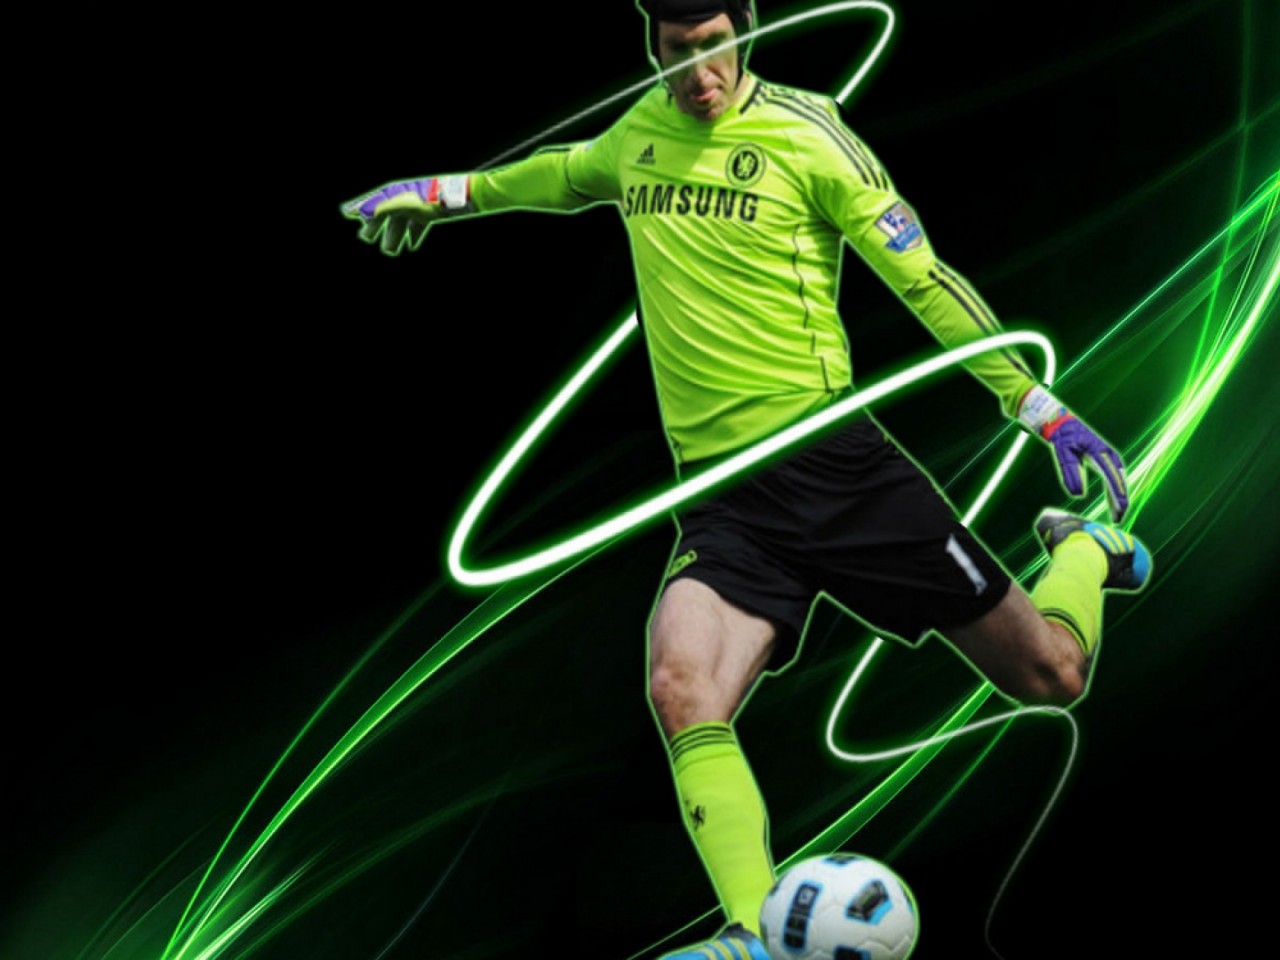 chelsea wallpaper,green,football player,football,soccer player,player